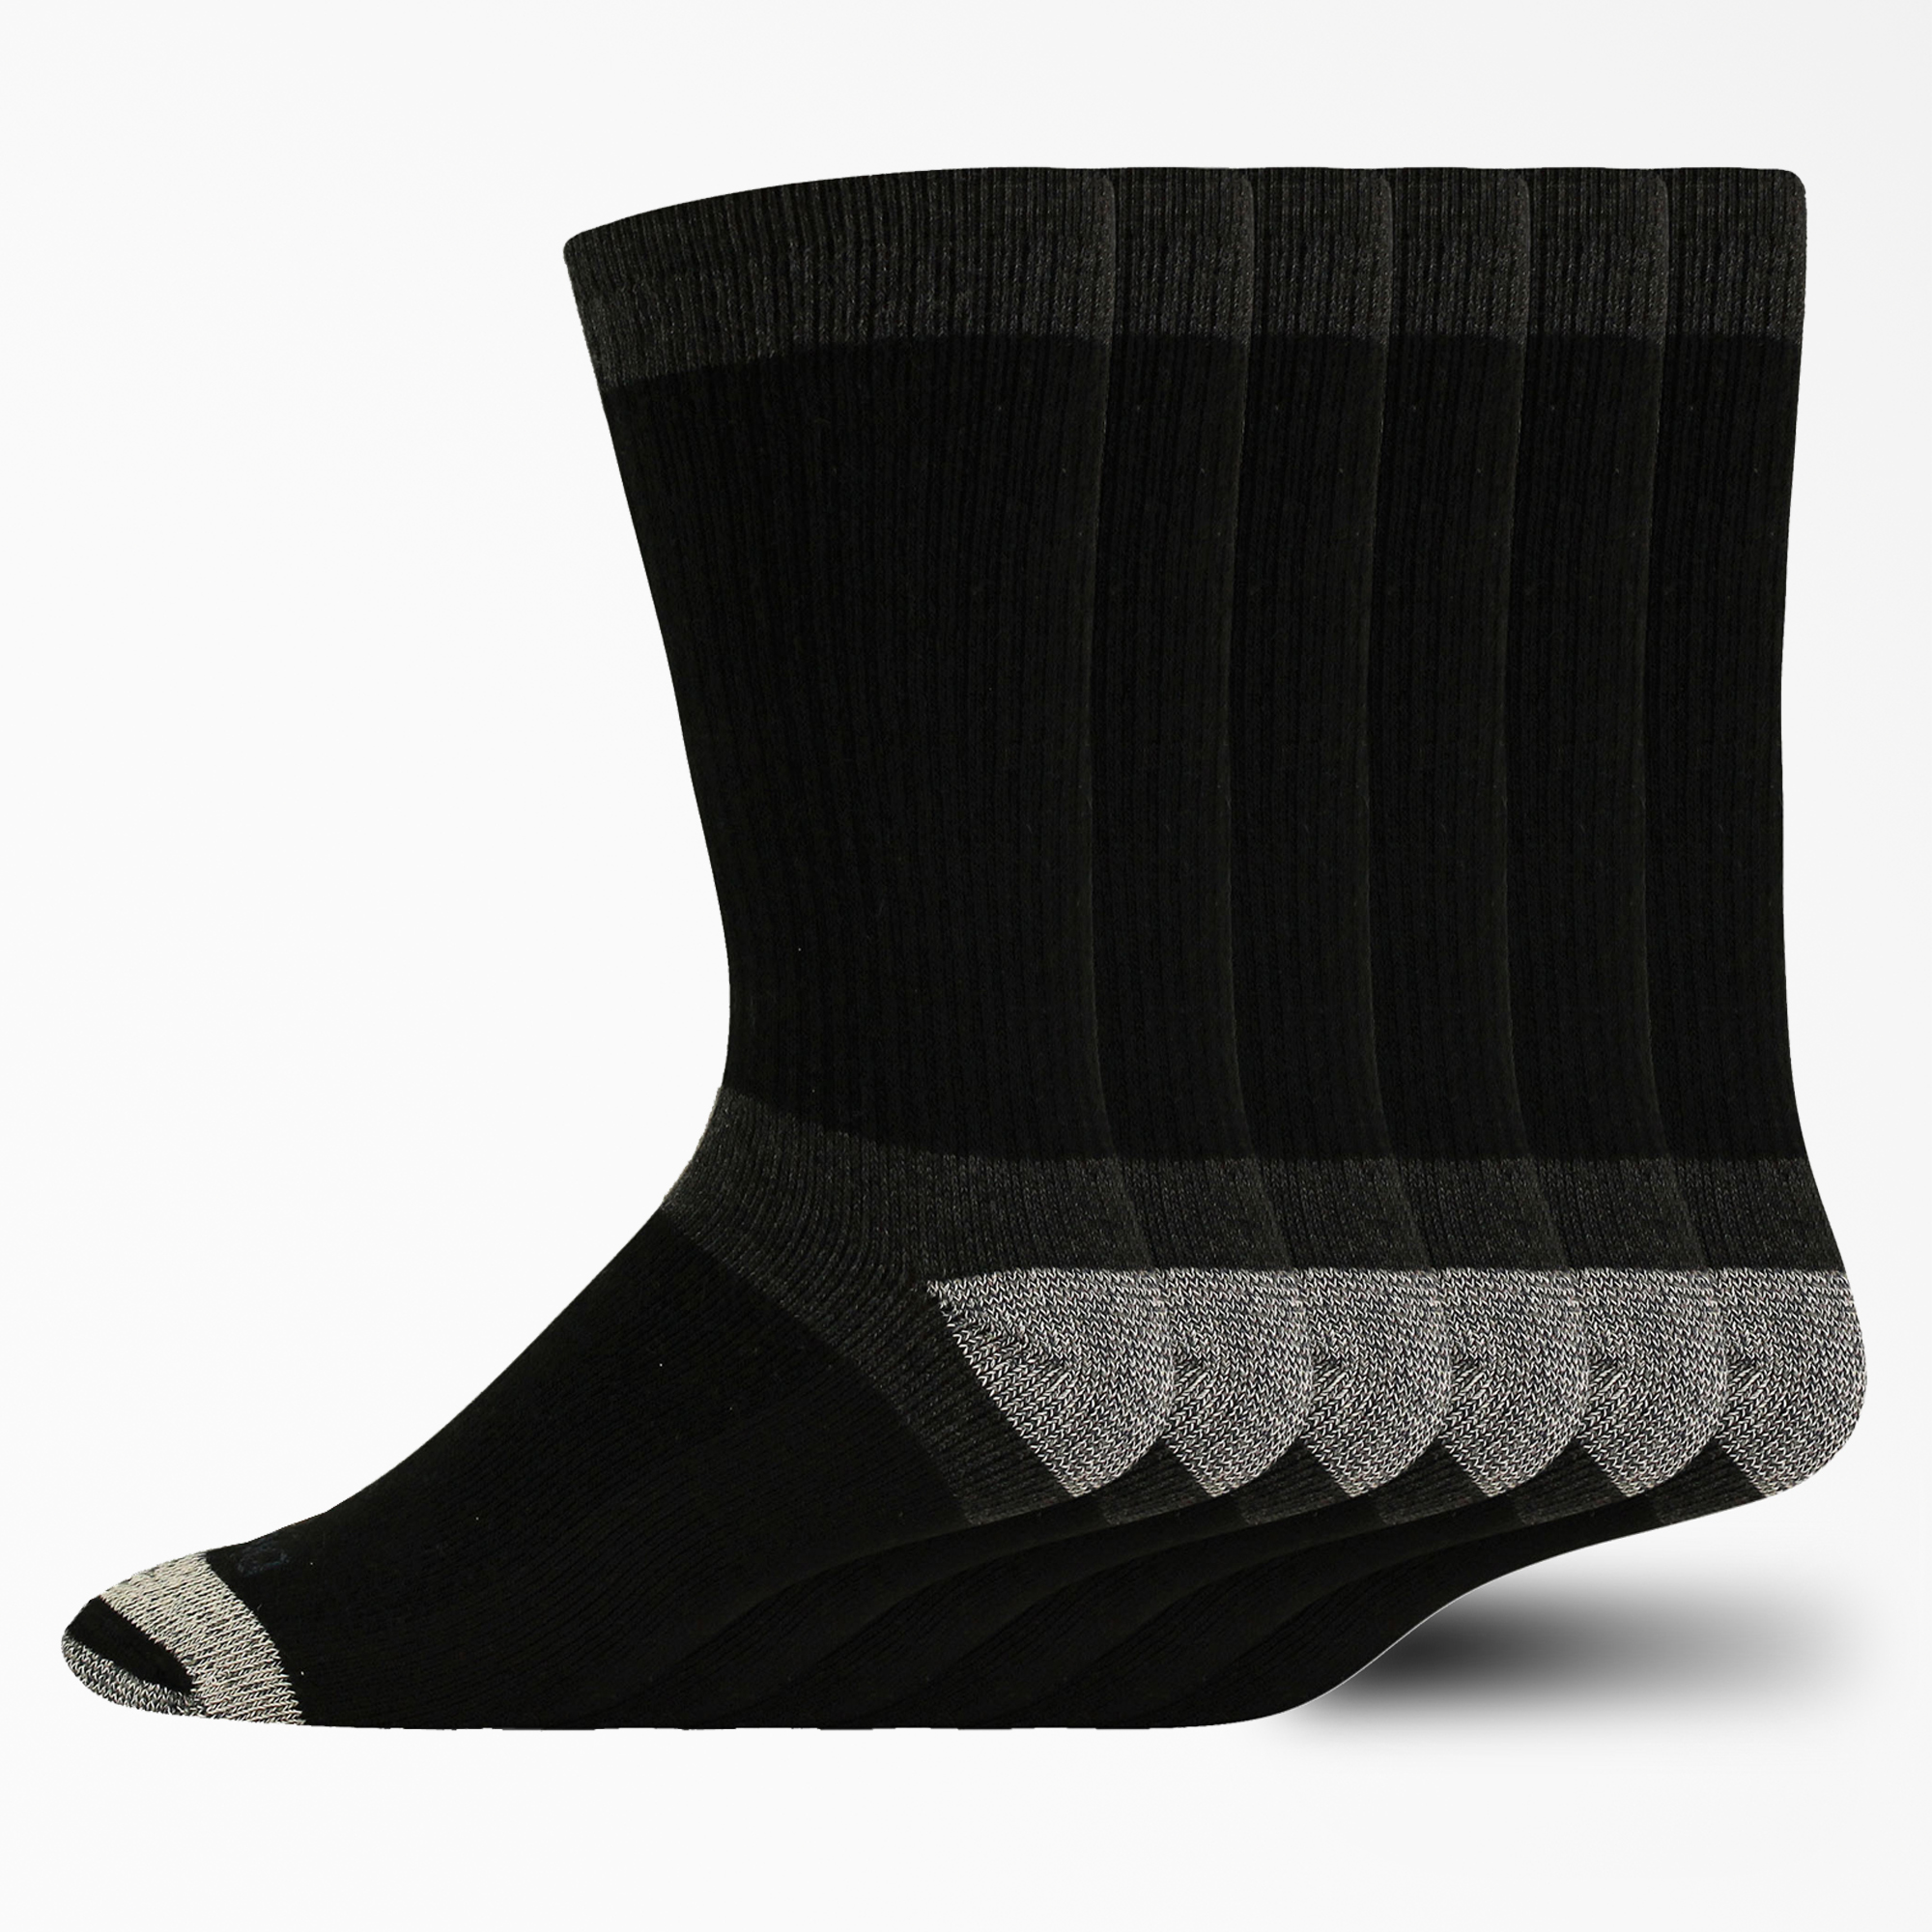 Dri-Tech Max Cushion Crew Socks, 6-Pack - Black (BK)